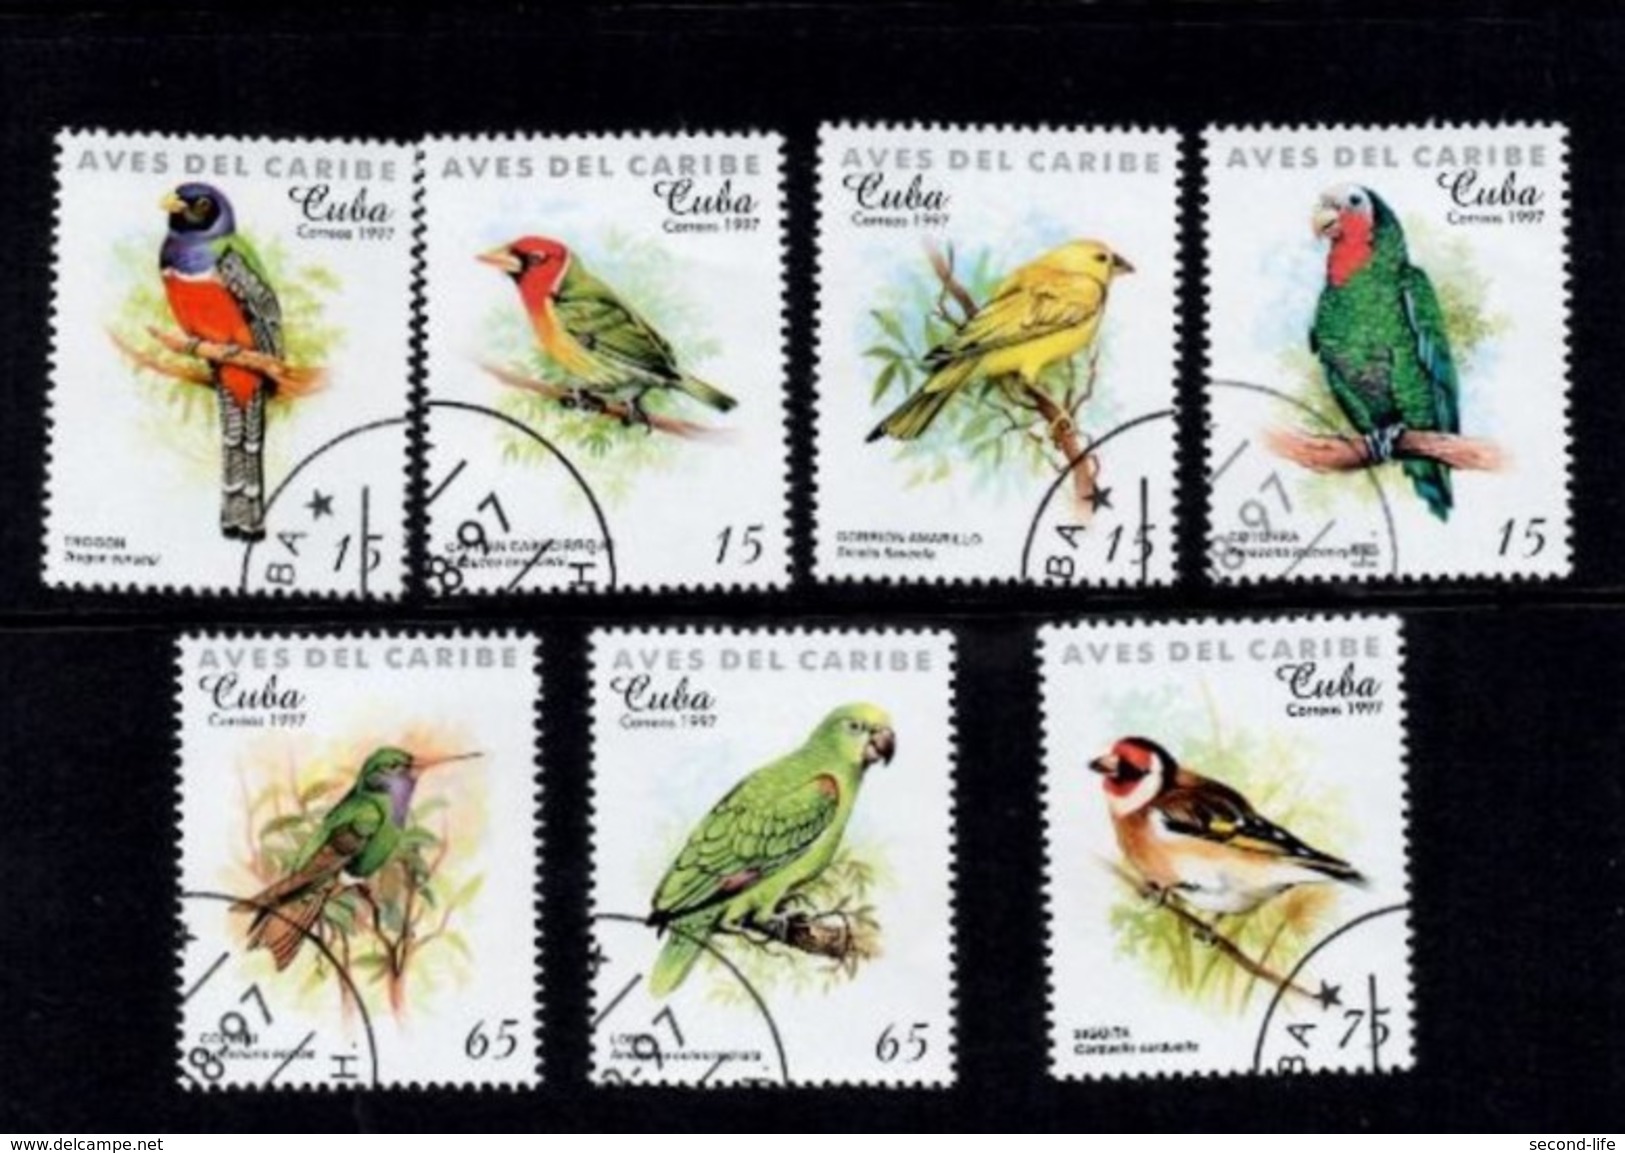 Birds Aves Del Caribe. Cuba 1977 - Vorphilatelie